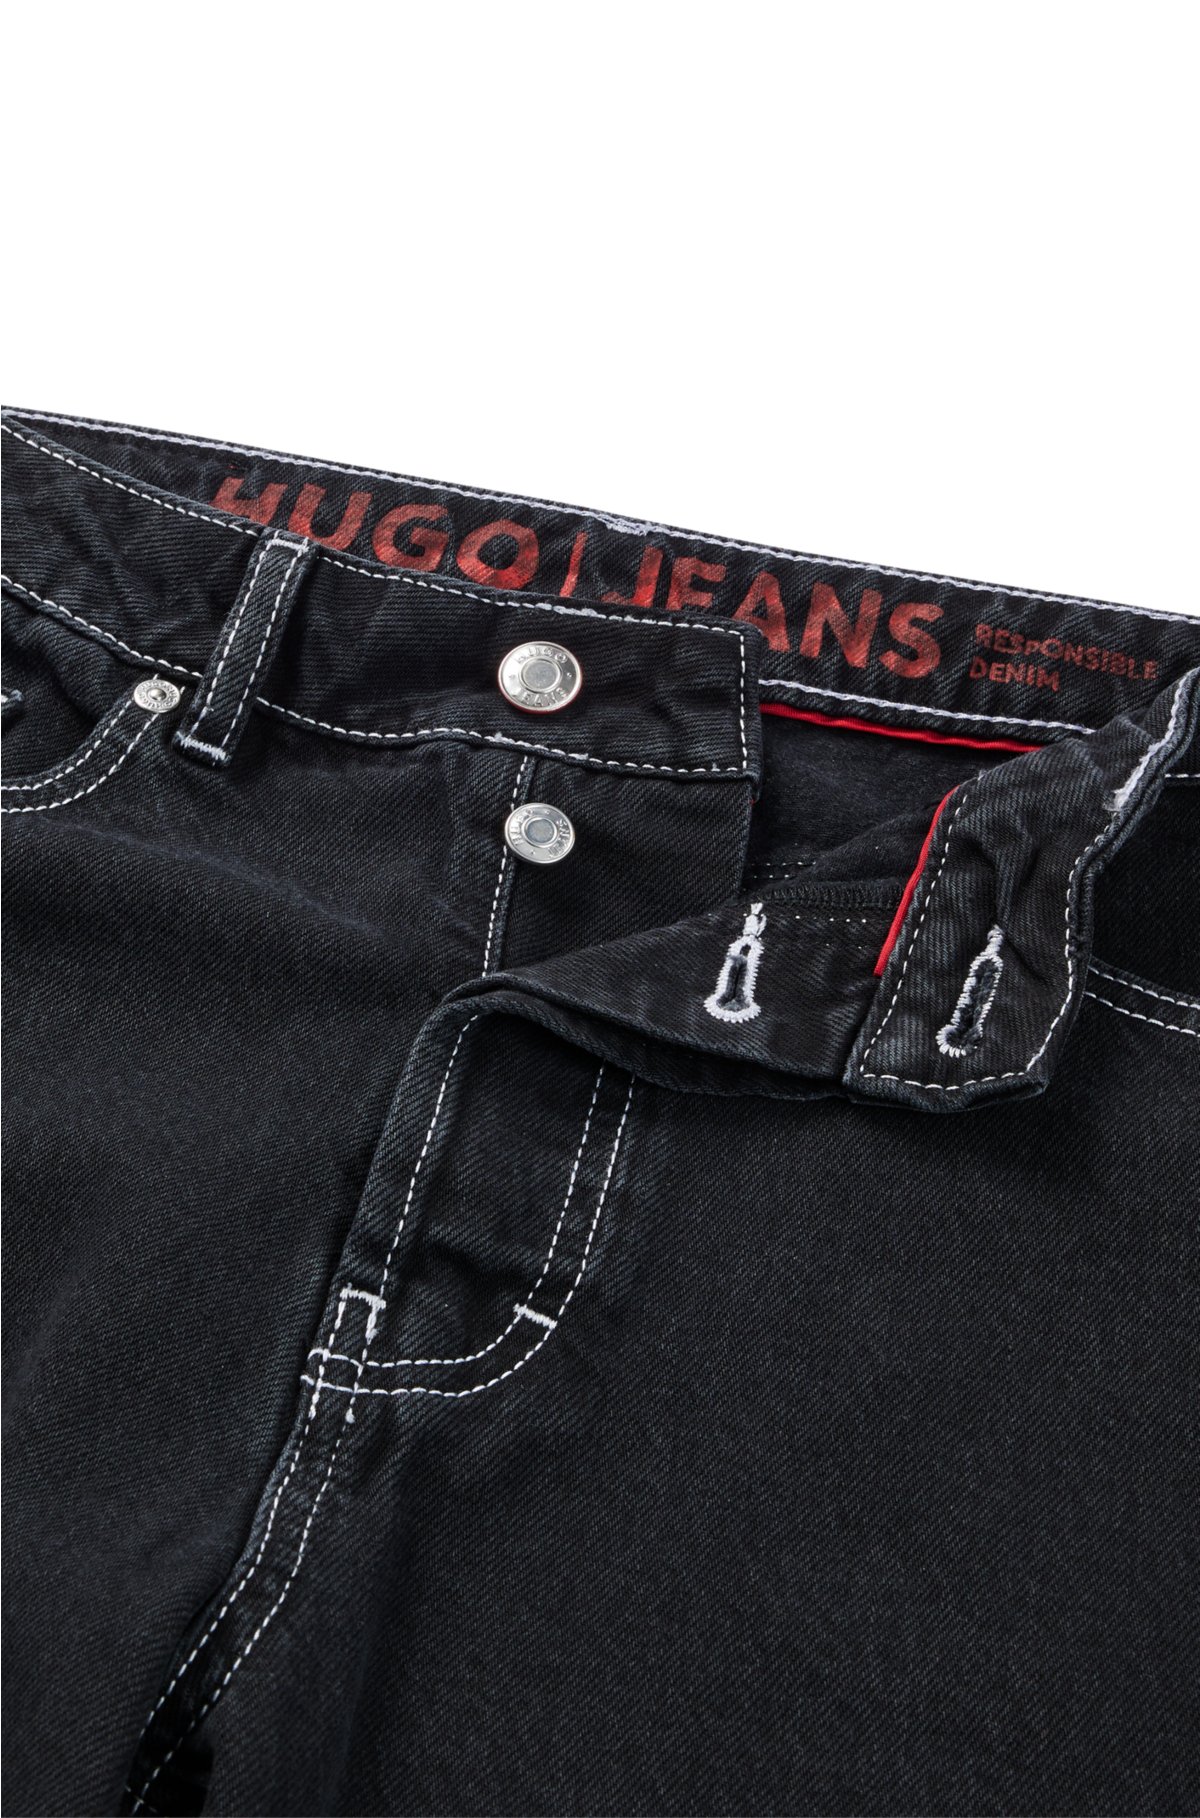 Men's Jeans Men Contrast Stitching Cargo Jeans Jeans for Men (Color :  White, Size : Large) : : Clothing, Shoes & Accessories